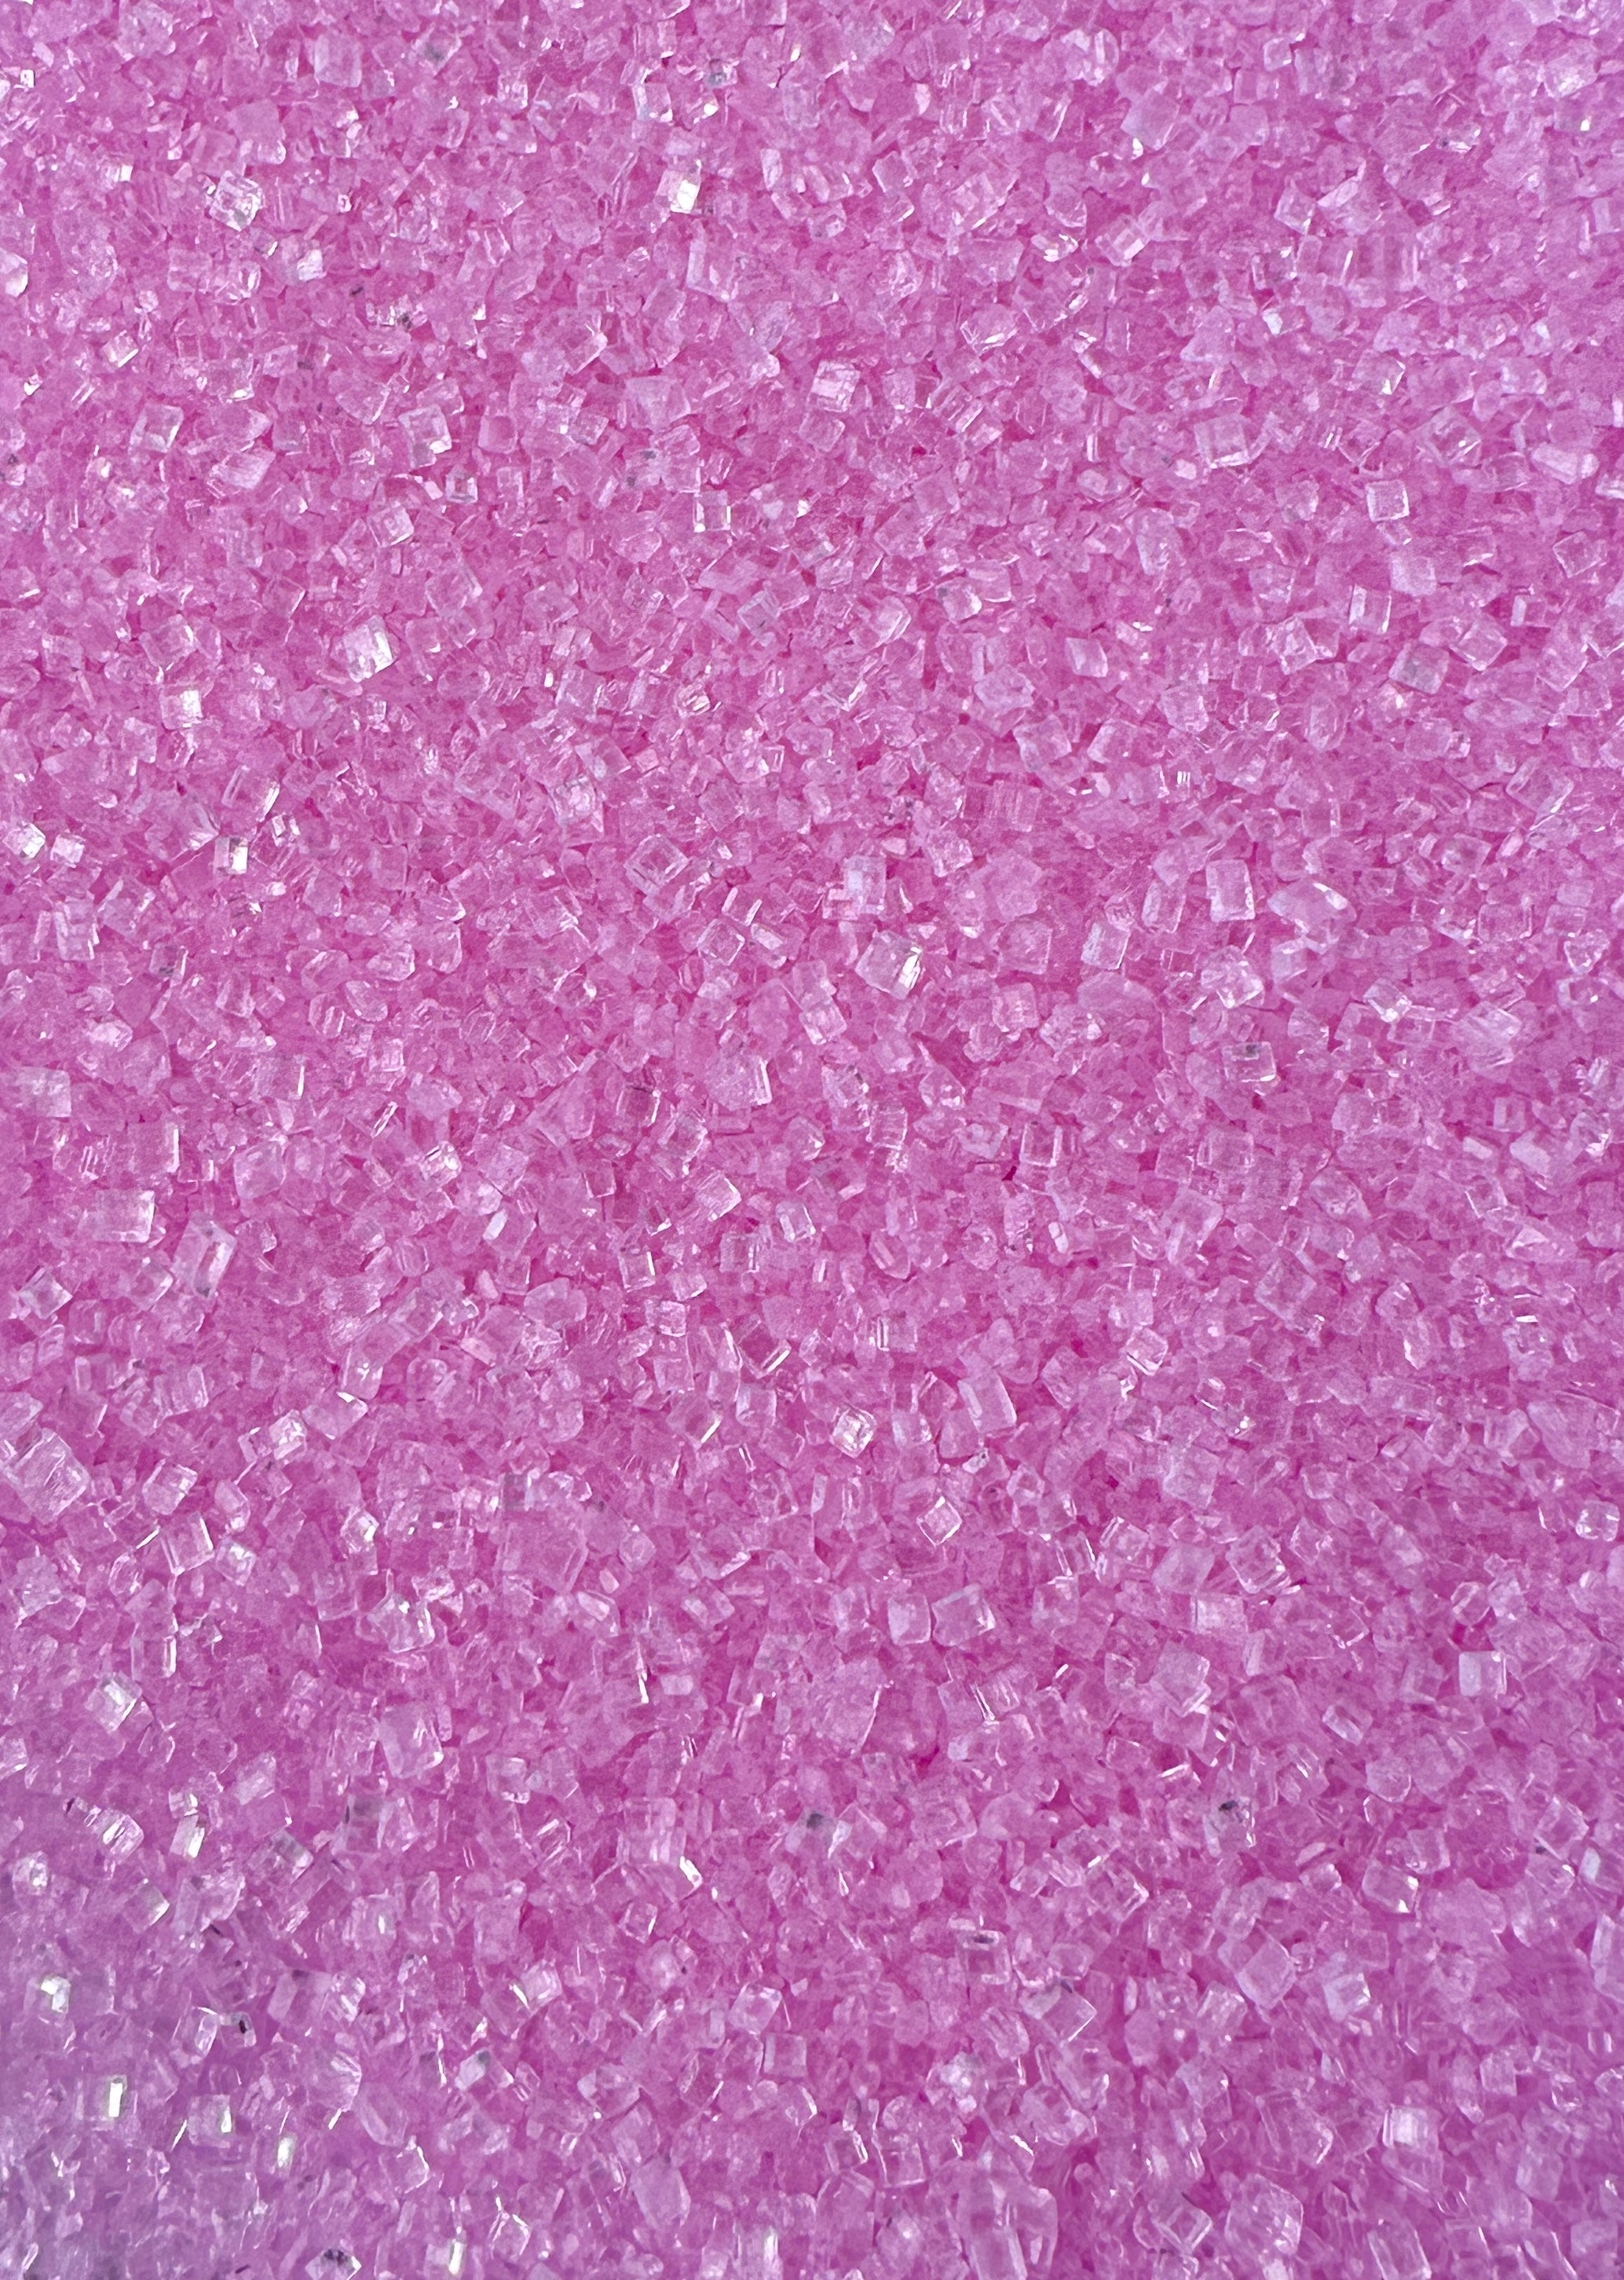 Pastel Pink Coarse Sugar - US